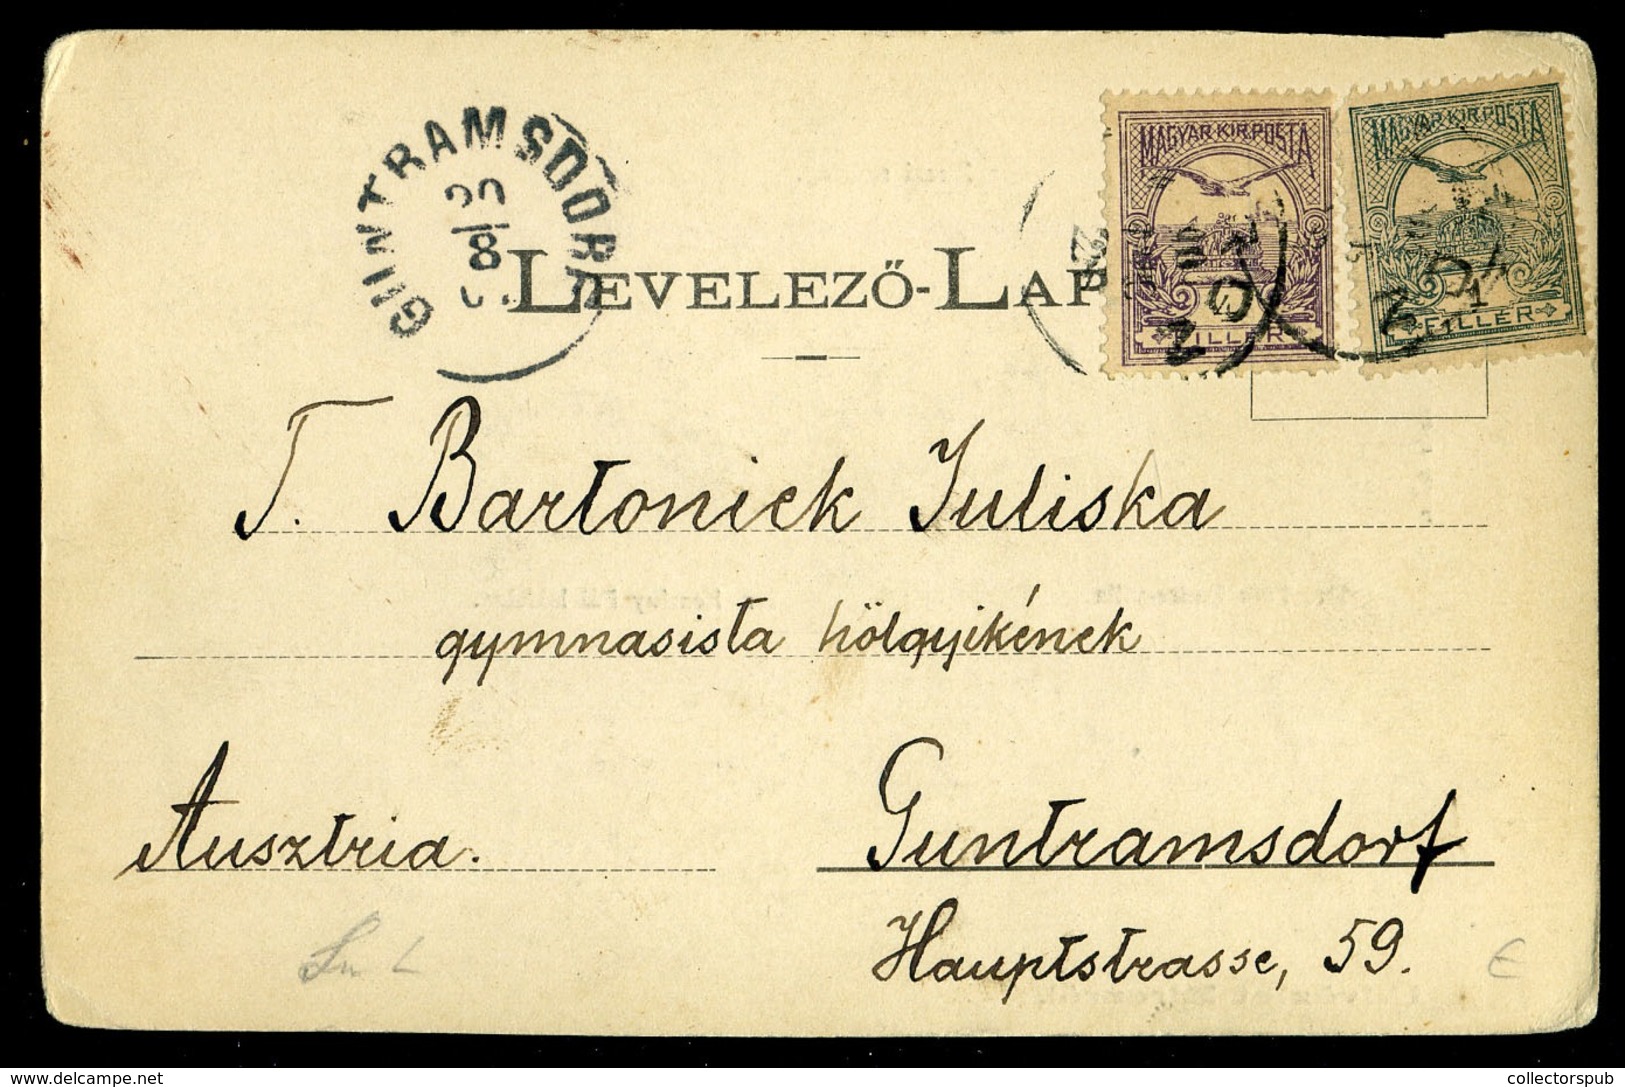 ZIRC 1900. Régi Képeslap - Hungary